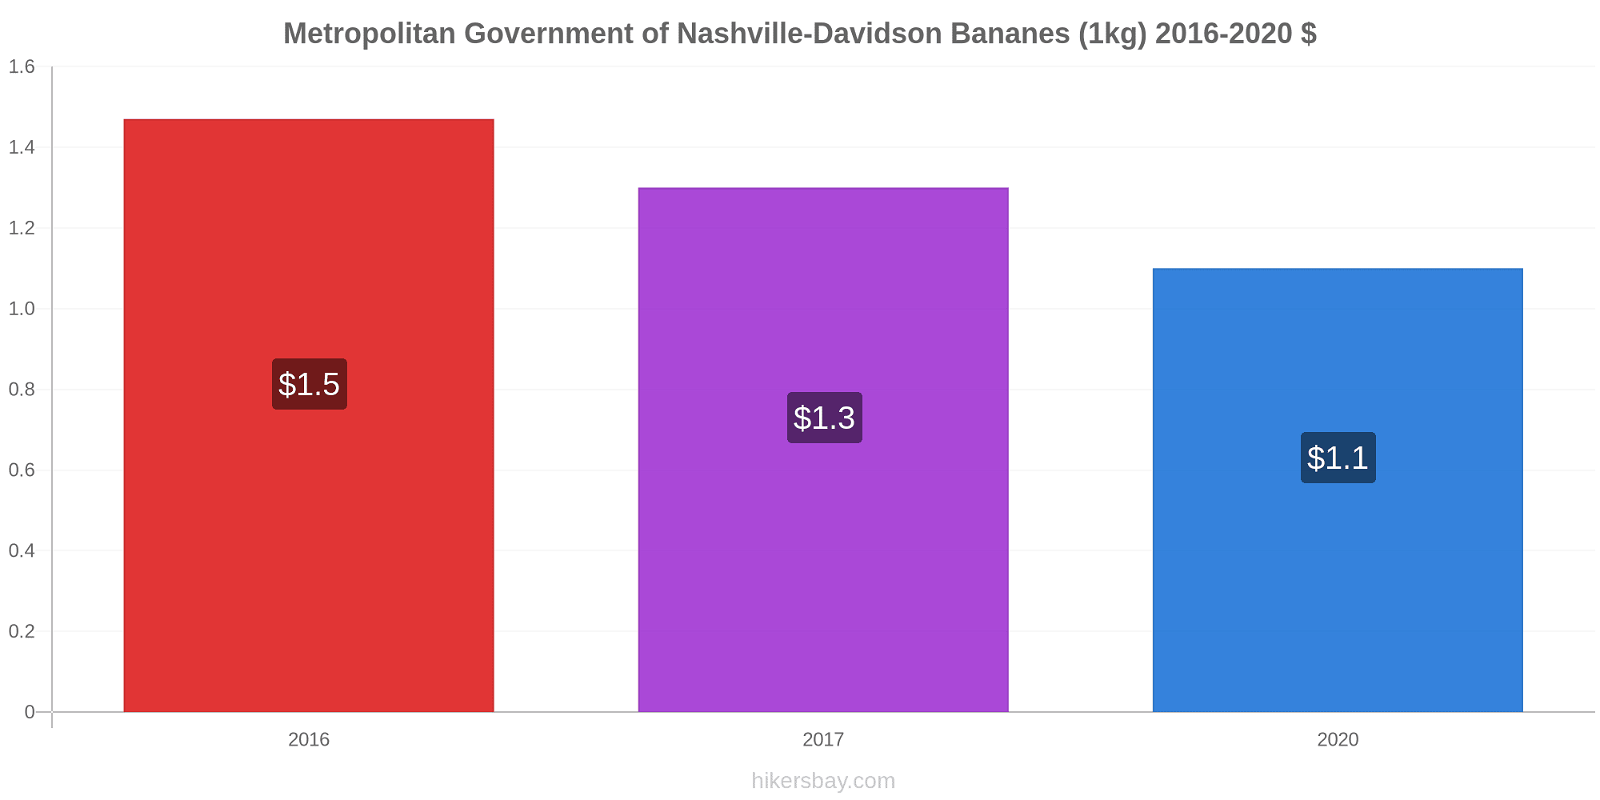 Metropolitan Government of Nashville-Davidson changements de prix Bananes (1kg) hikersbay.com